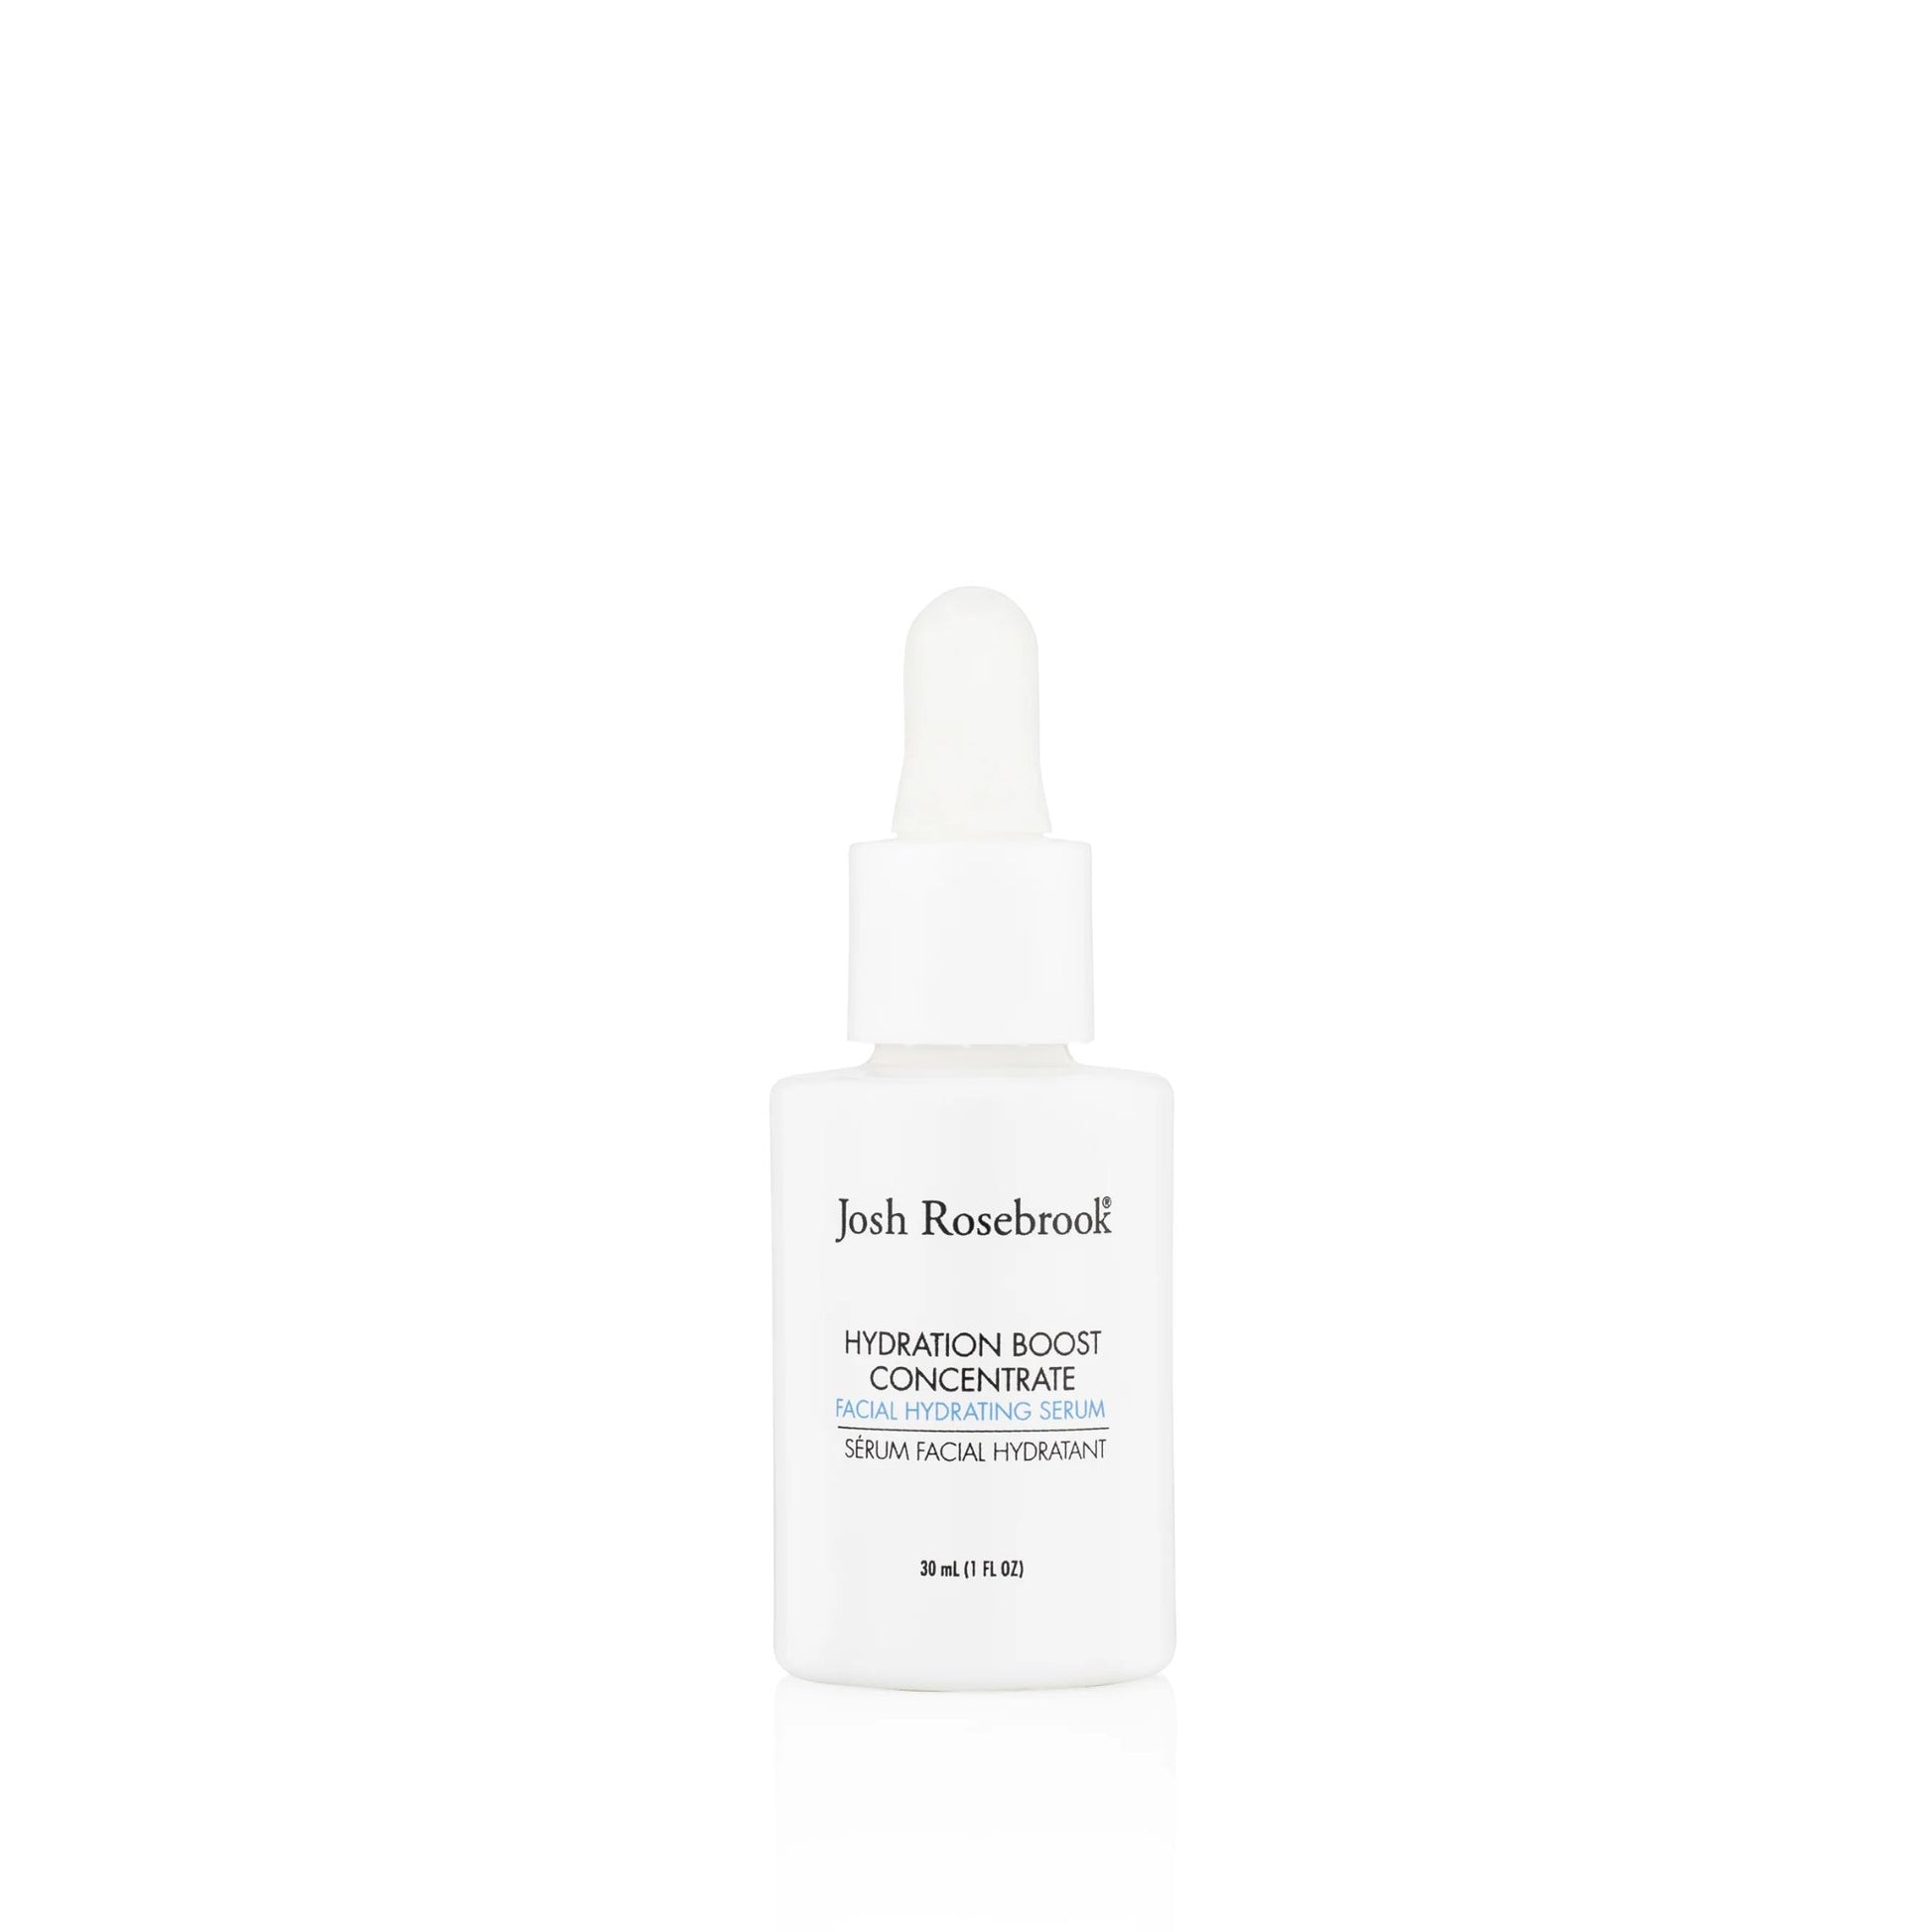 Josh Rosebrook - Josh Rosebrook Hydration Boost Concentrate - ORESTA clean beauty simplified